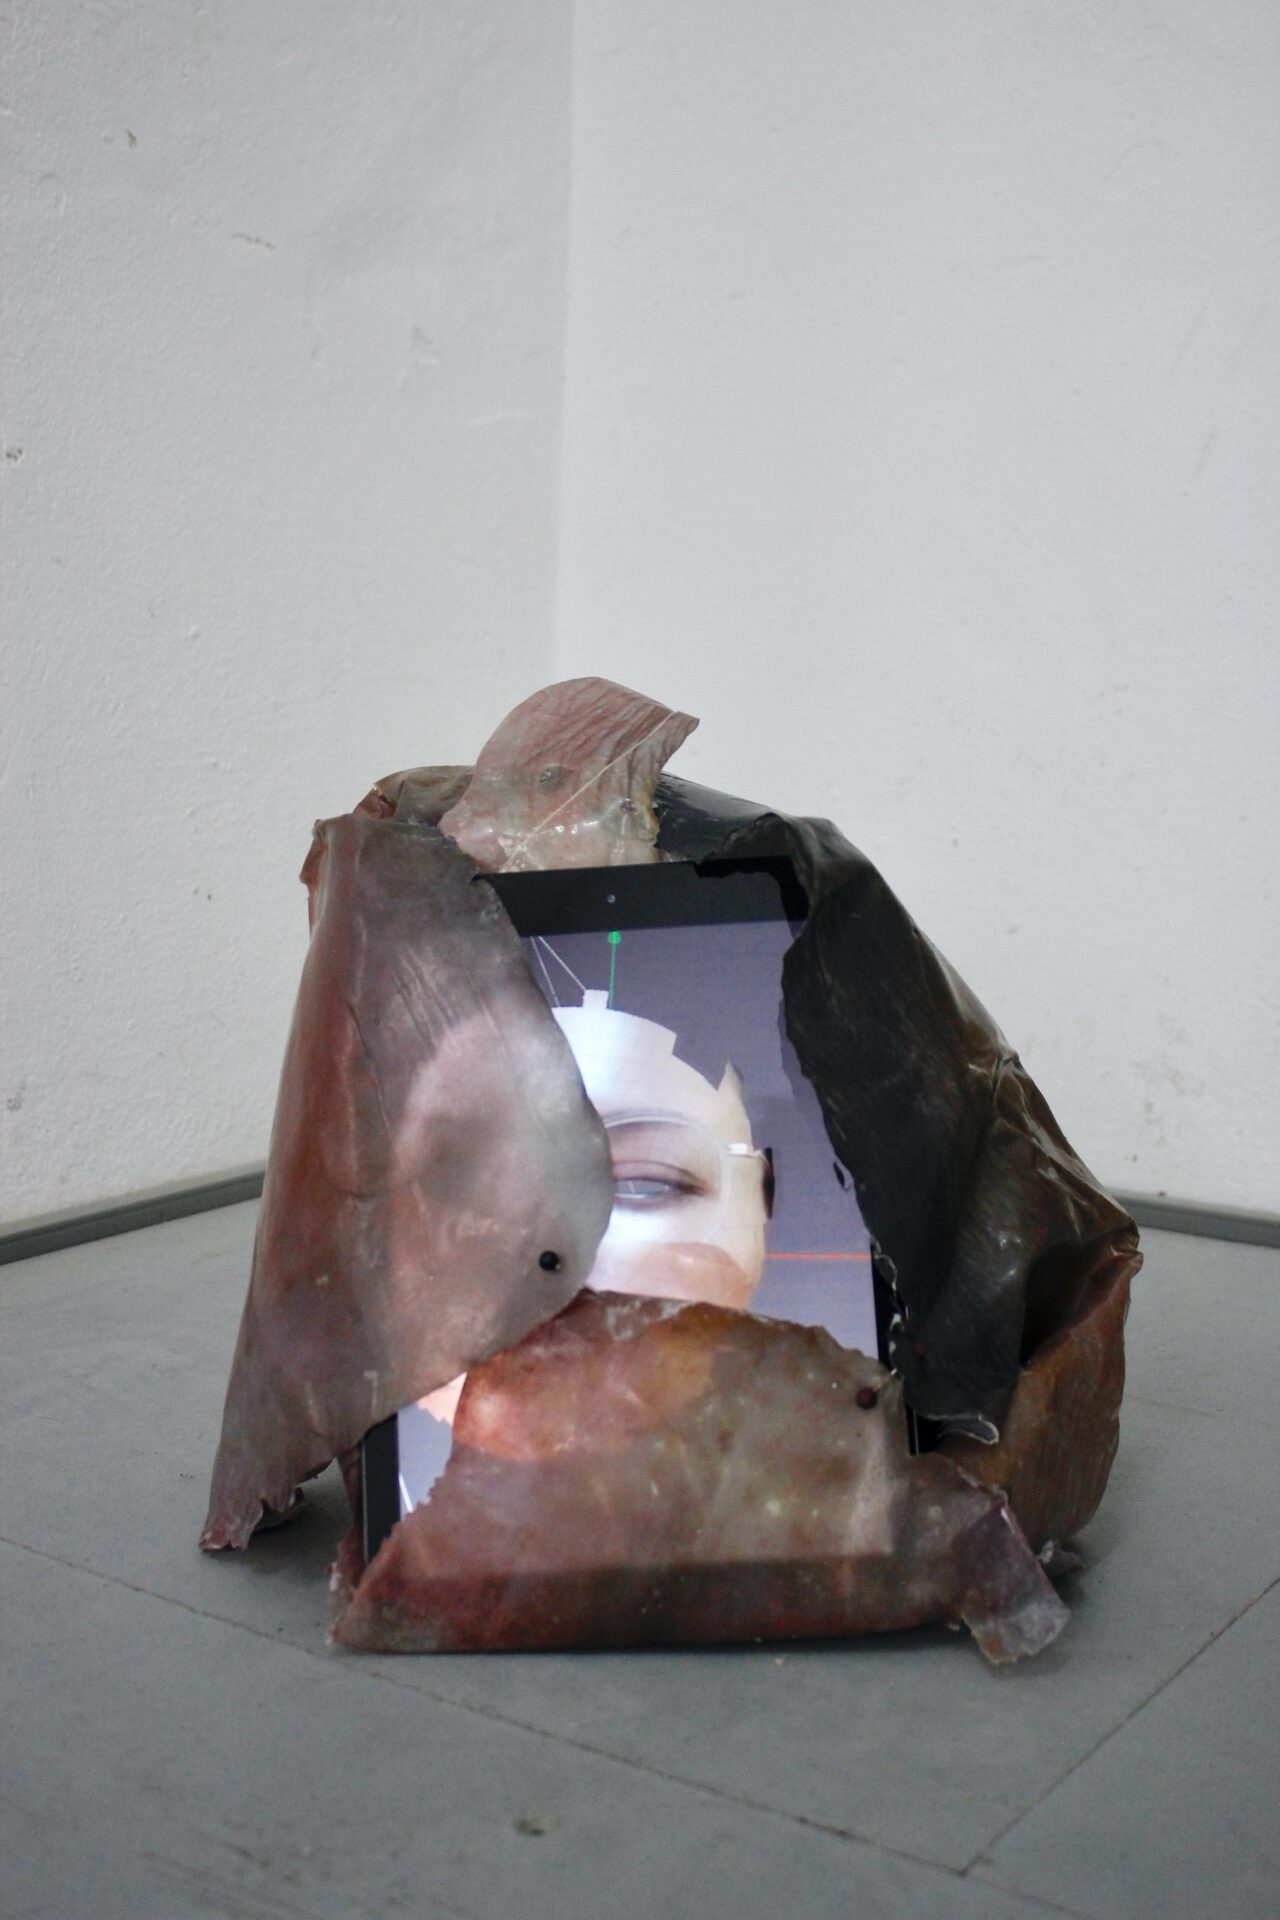 A Californian Plumber, 2020, Agnieszka Szostek at Fugitif, Leipzig, installation view